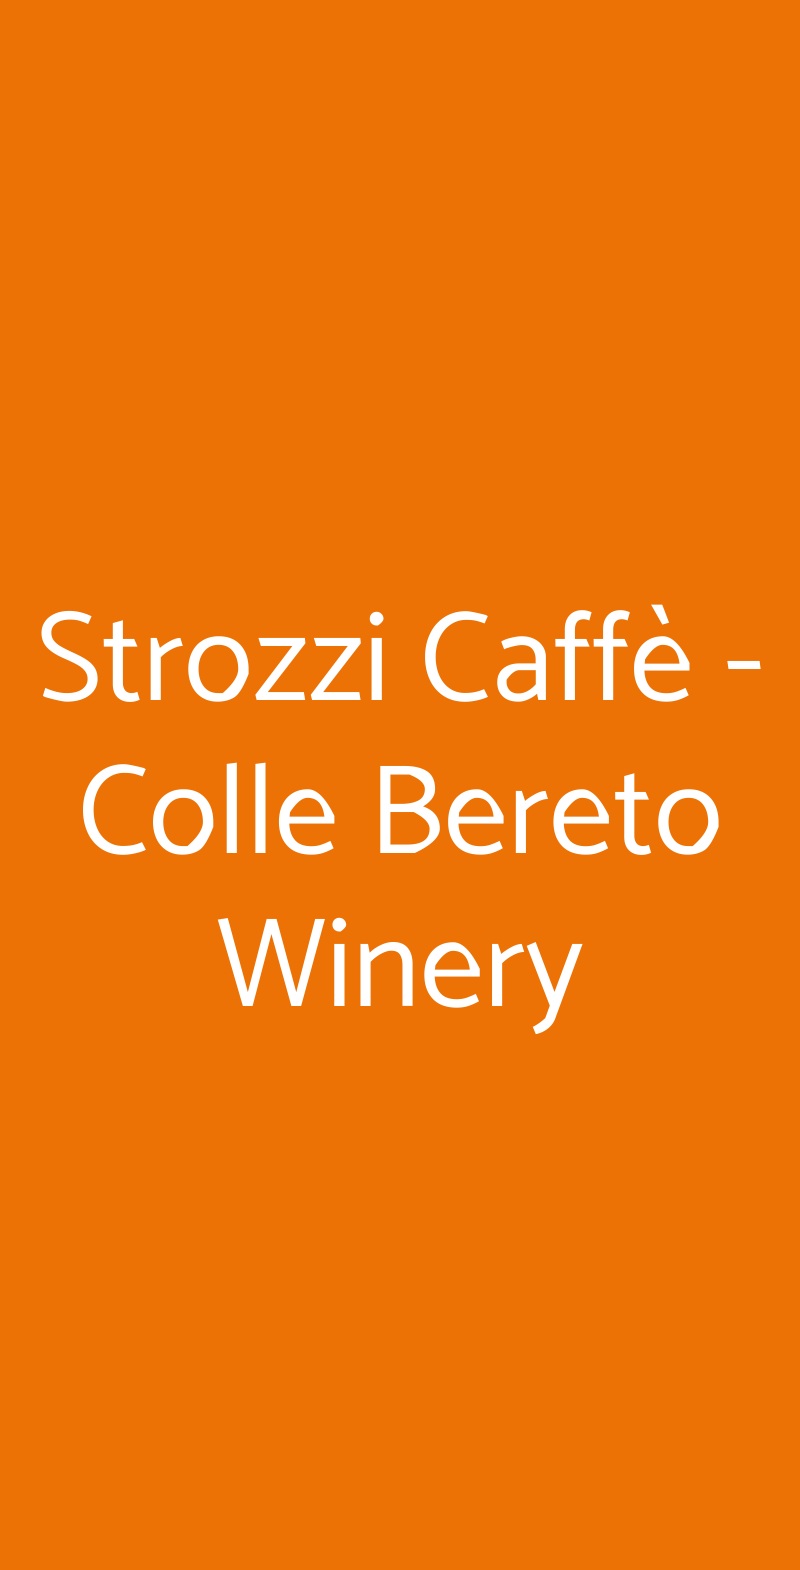 Strozzi Caffè - Colle Bereto Winery Firenze menù 1 pagina